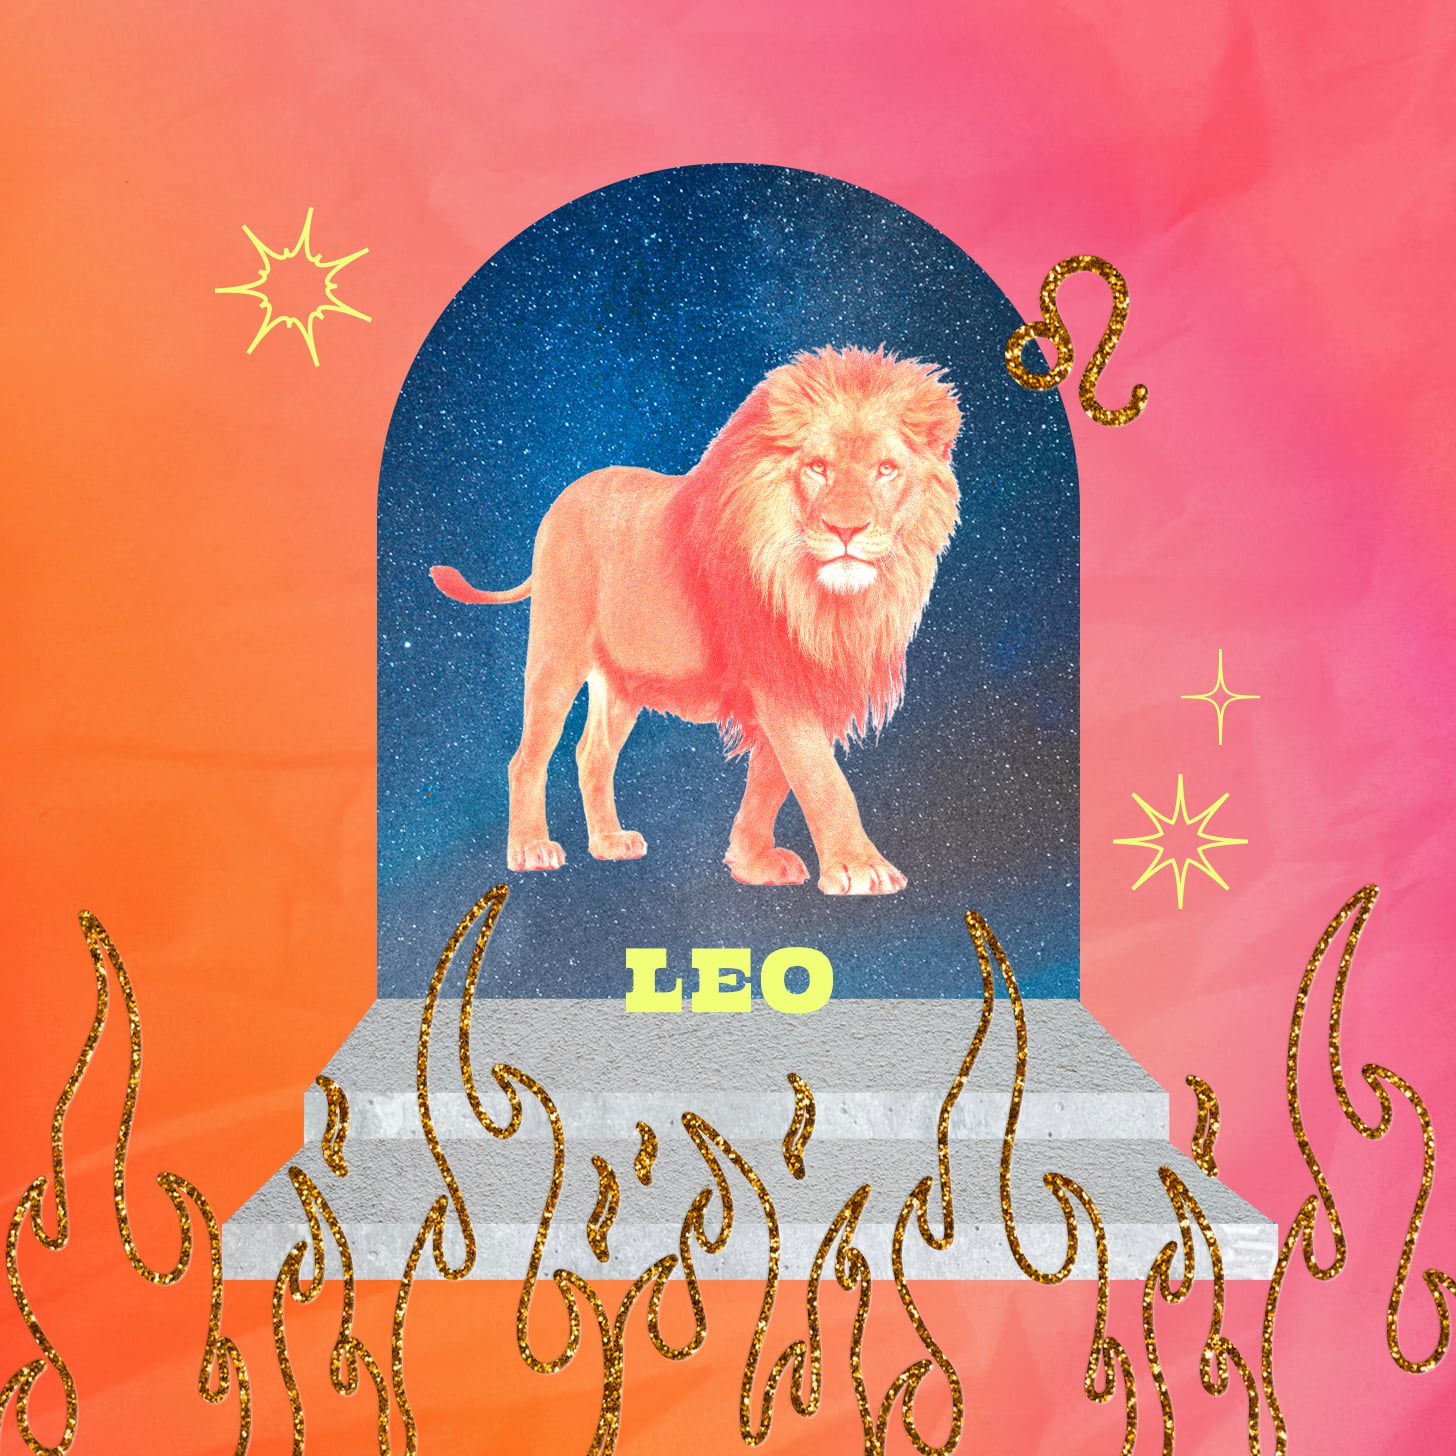 Leo weekly horoscope for December 18, 2022 